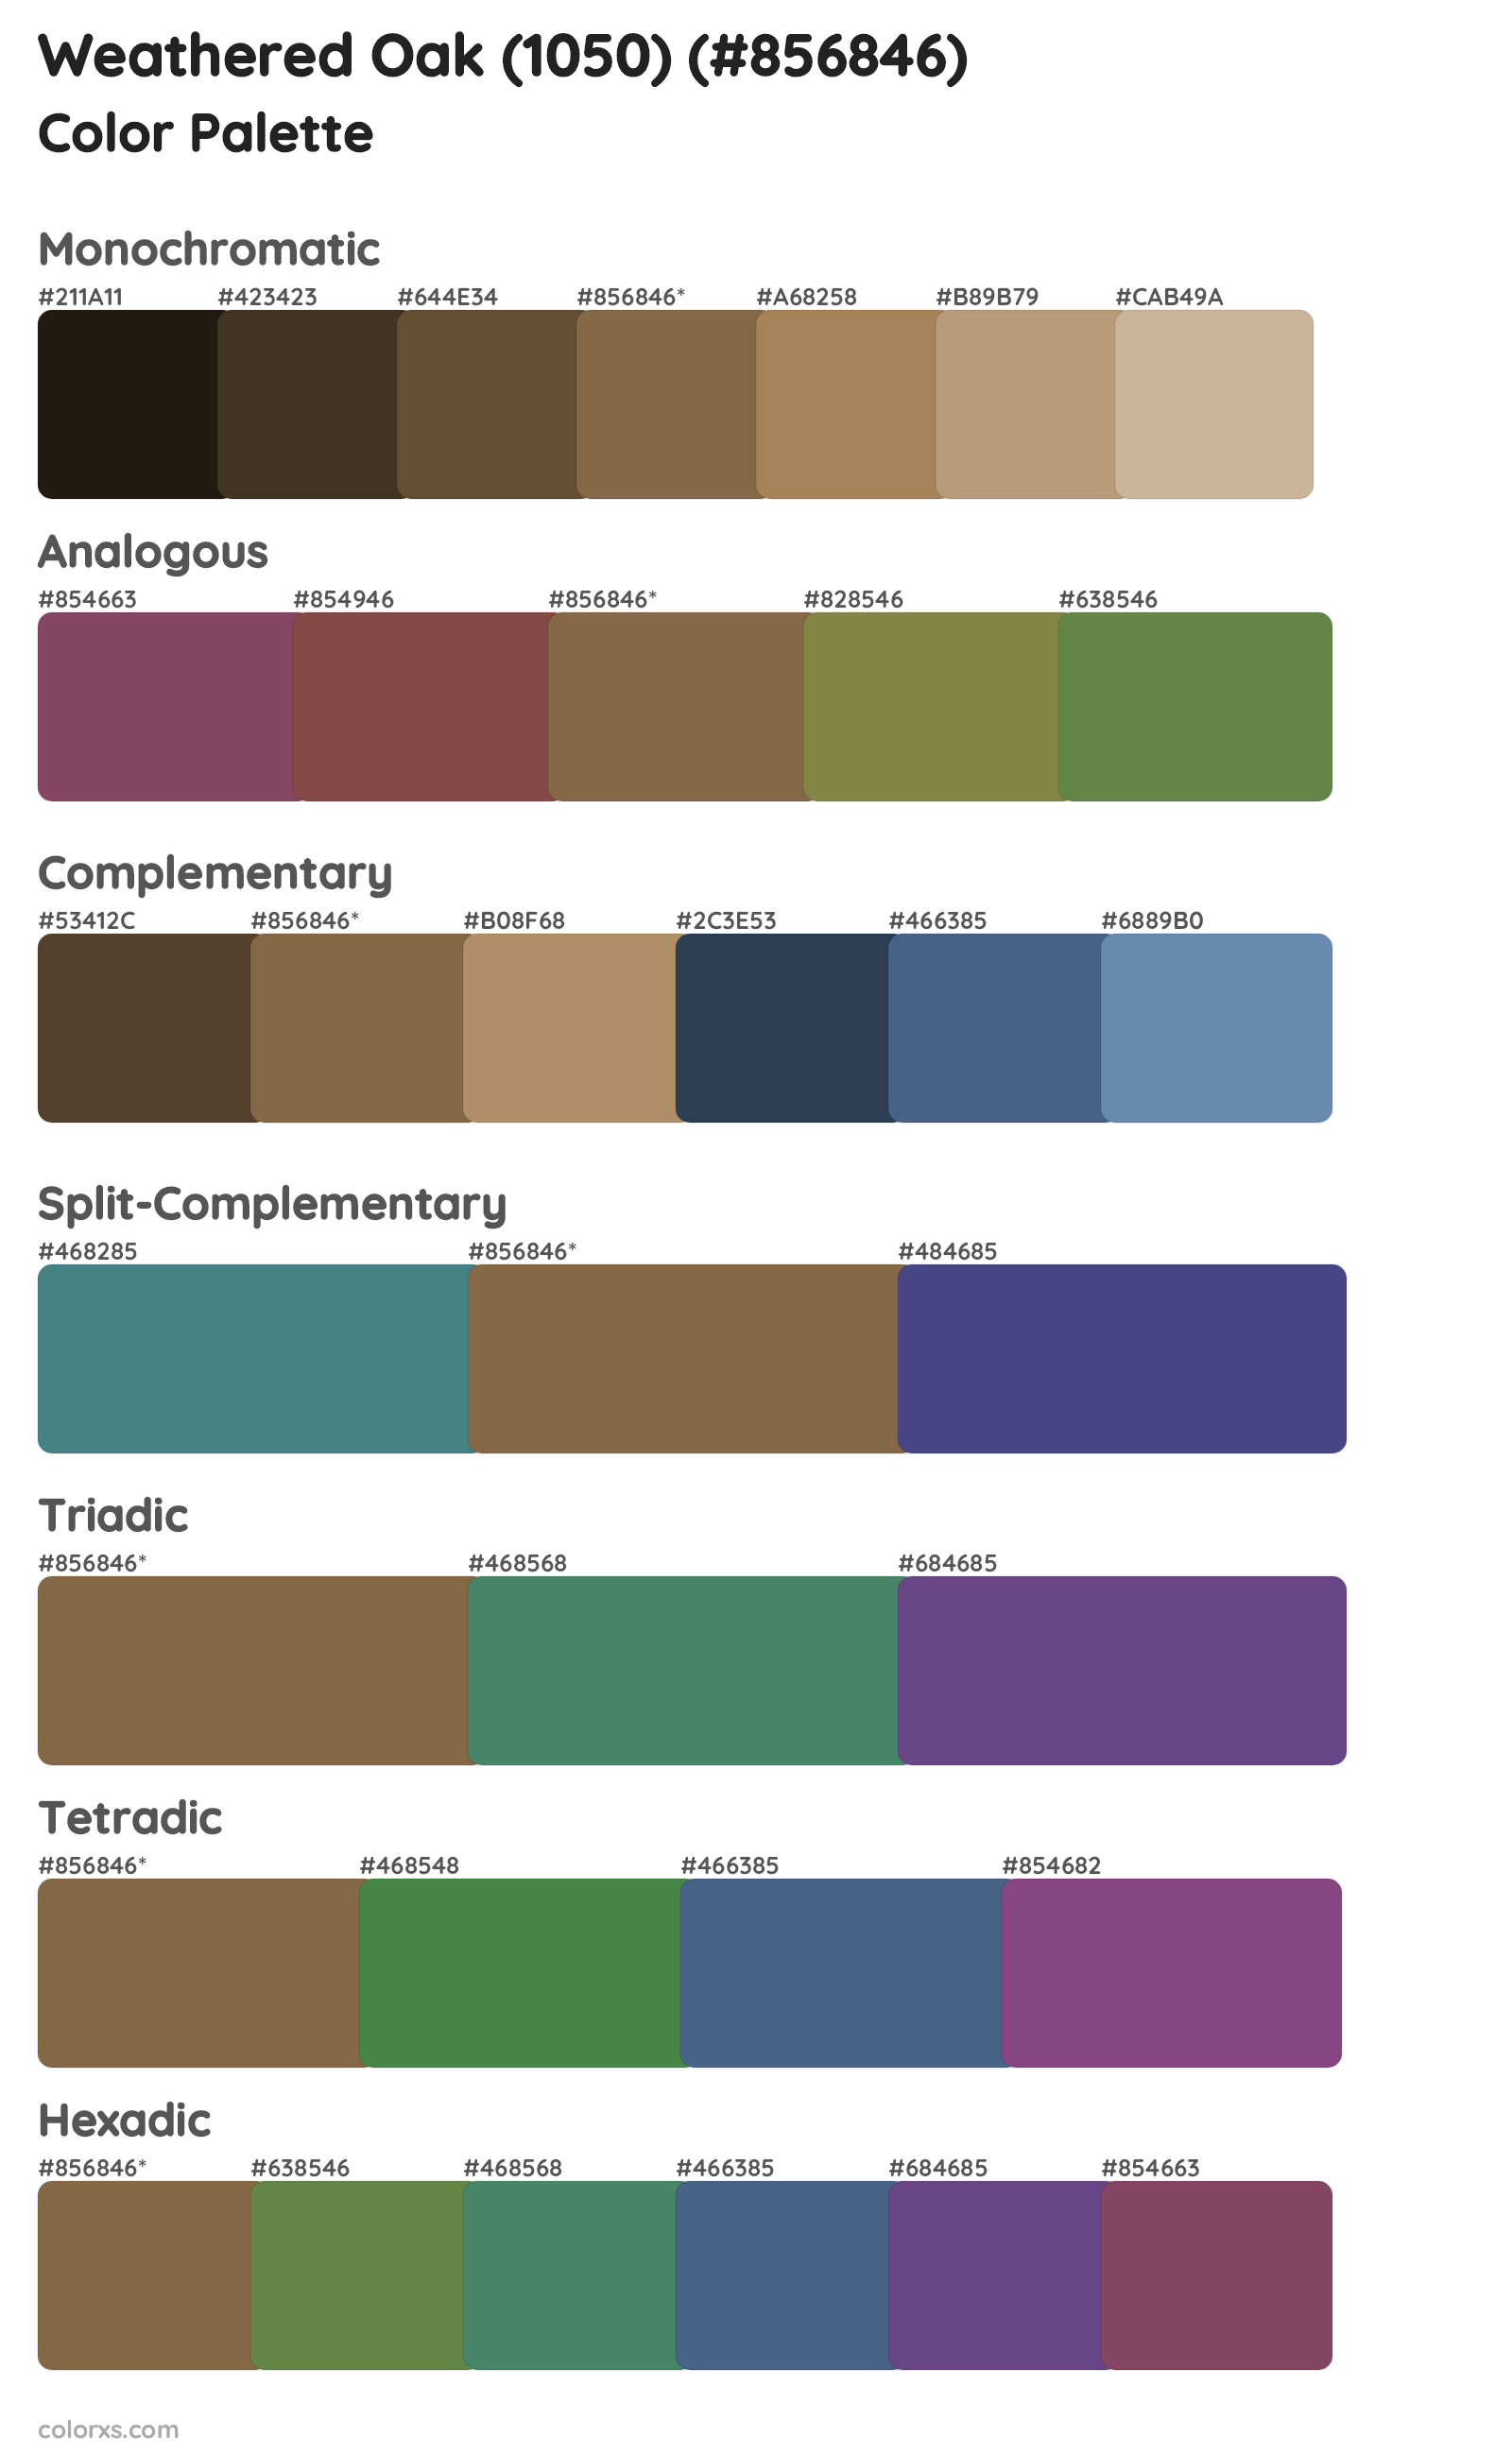 Weathered Oak (1050) Color Scheme Palettes